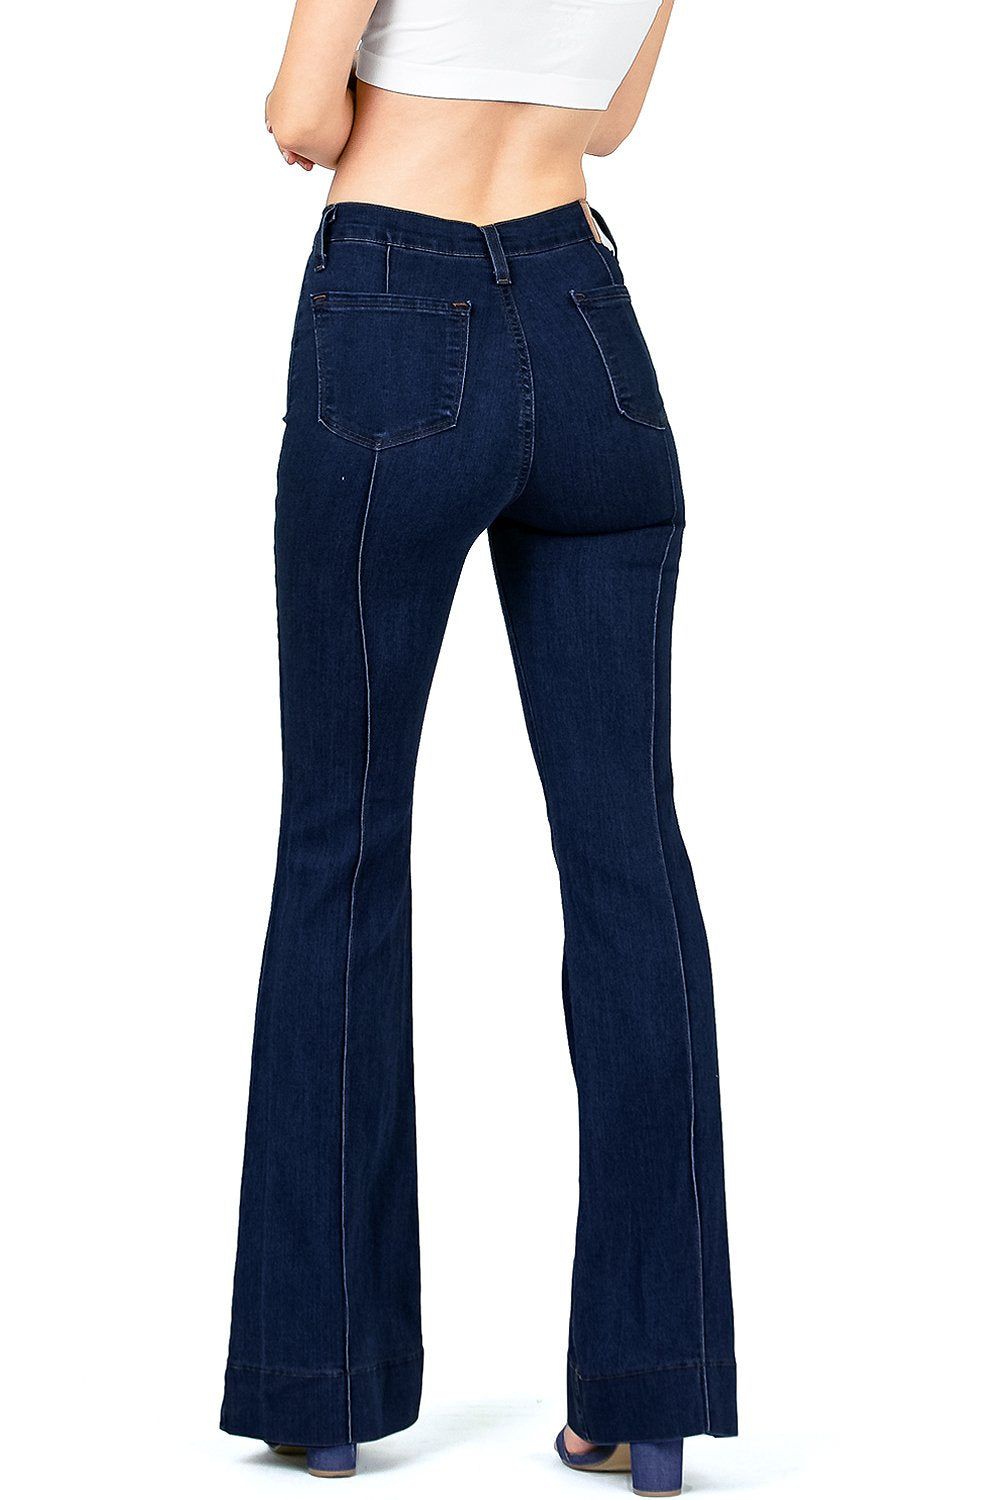 Pin Tuck Bell Bottom Jeans